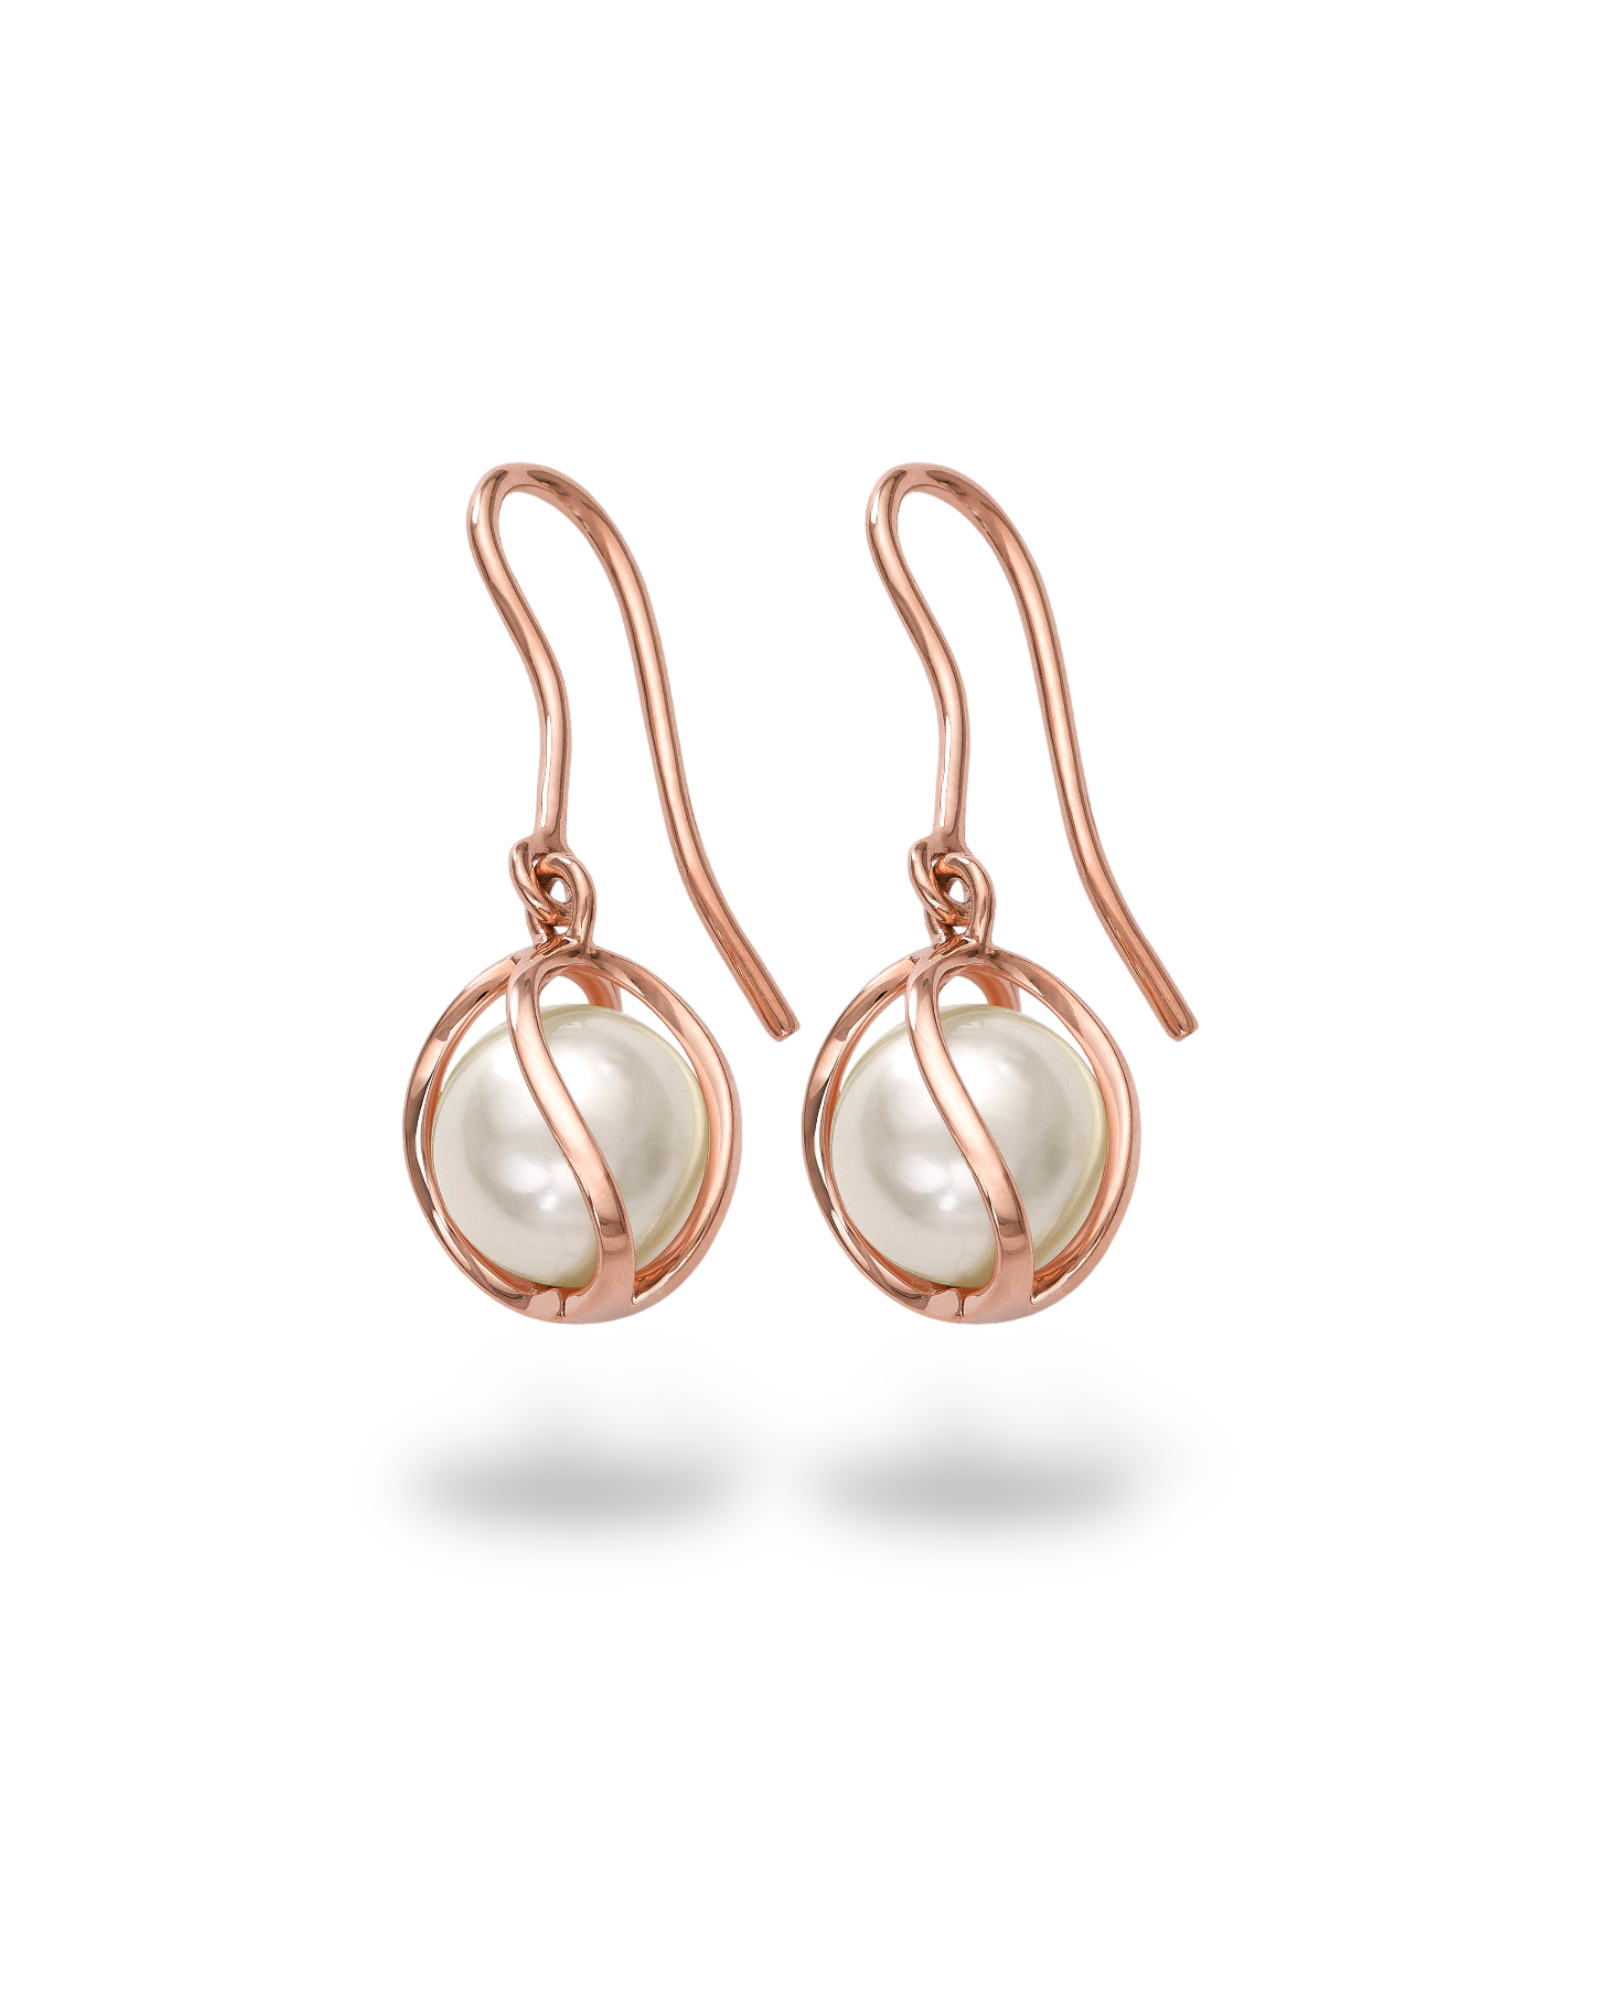 The Suspension Earrings - Pearl / Rose Gold Devam